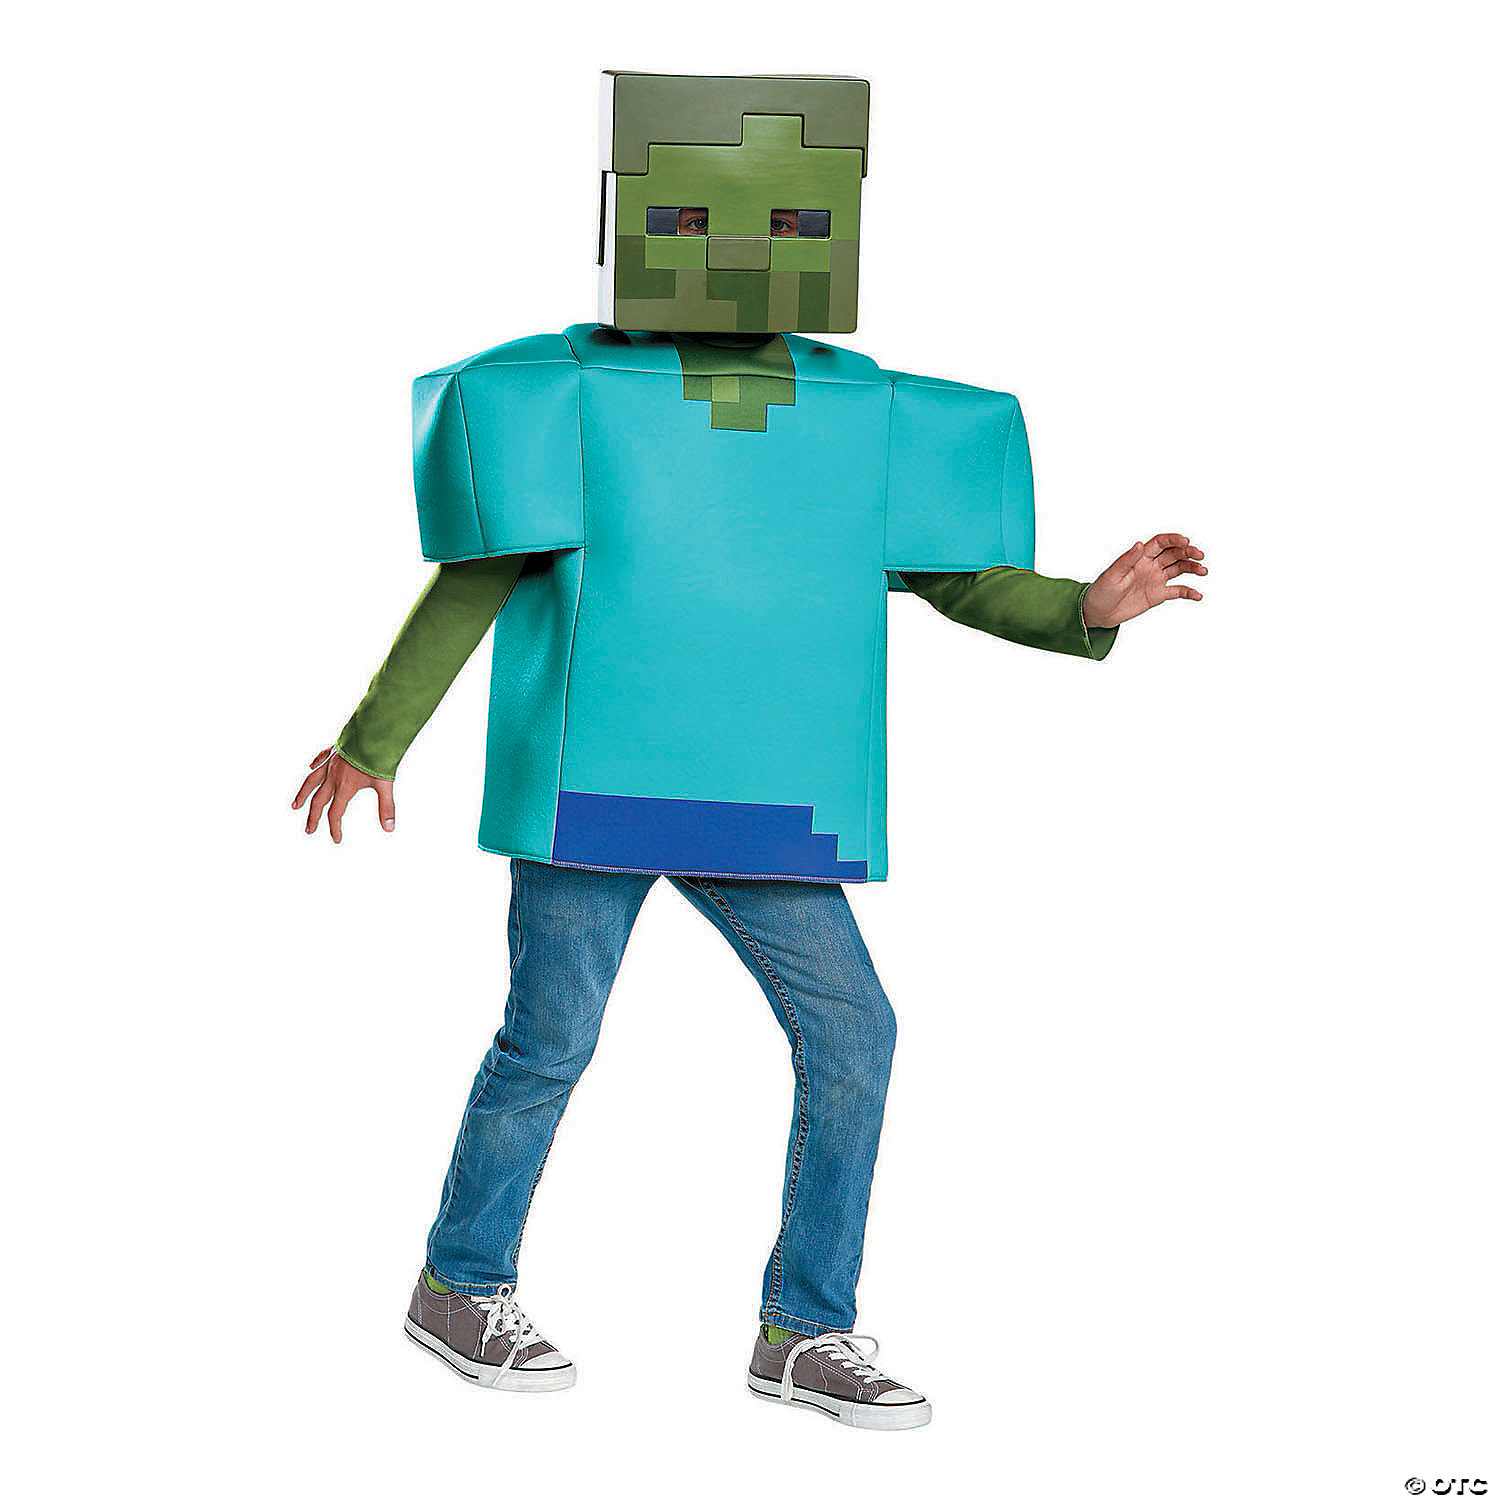 Minecraft Creeper Little Boys Coverall Green 4